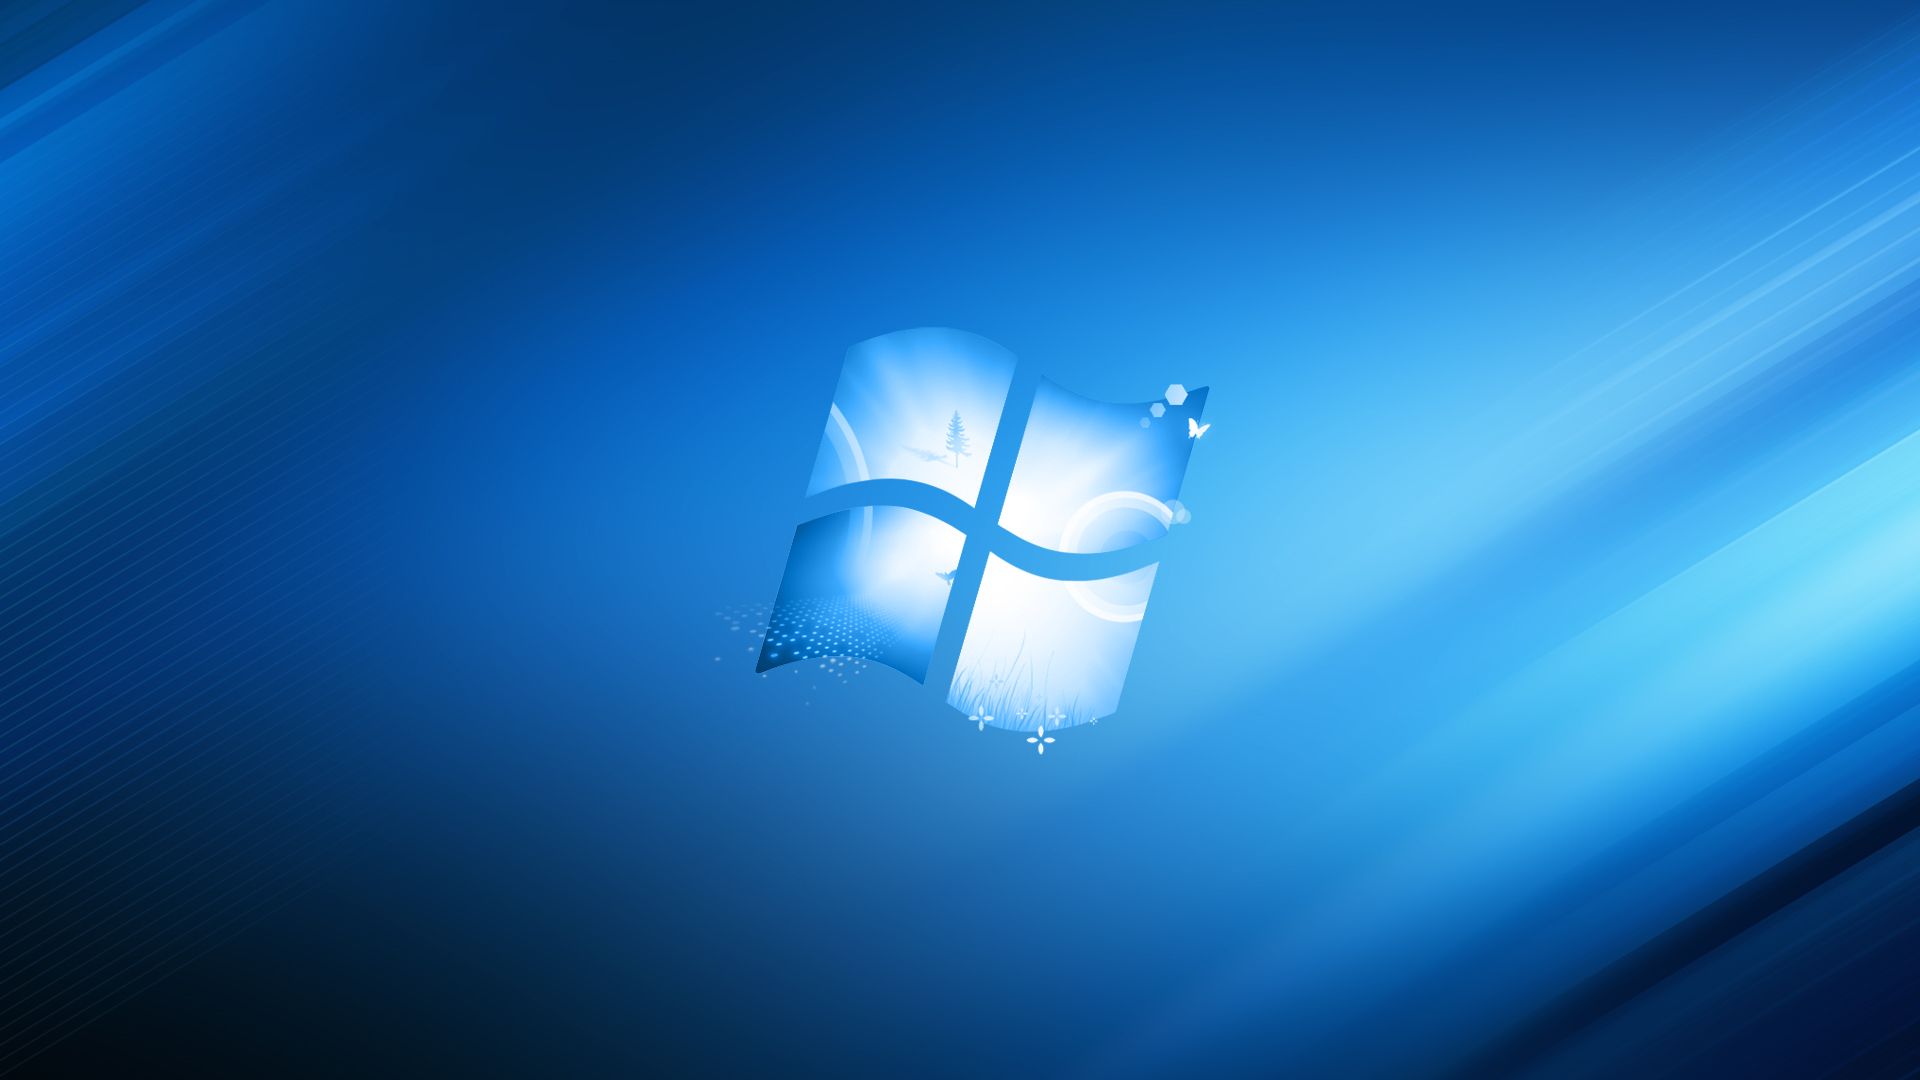 Windows 8 Backgrounds Wallpaper HD Free Download New HD